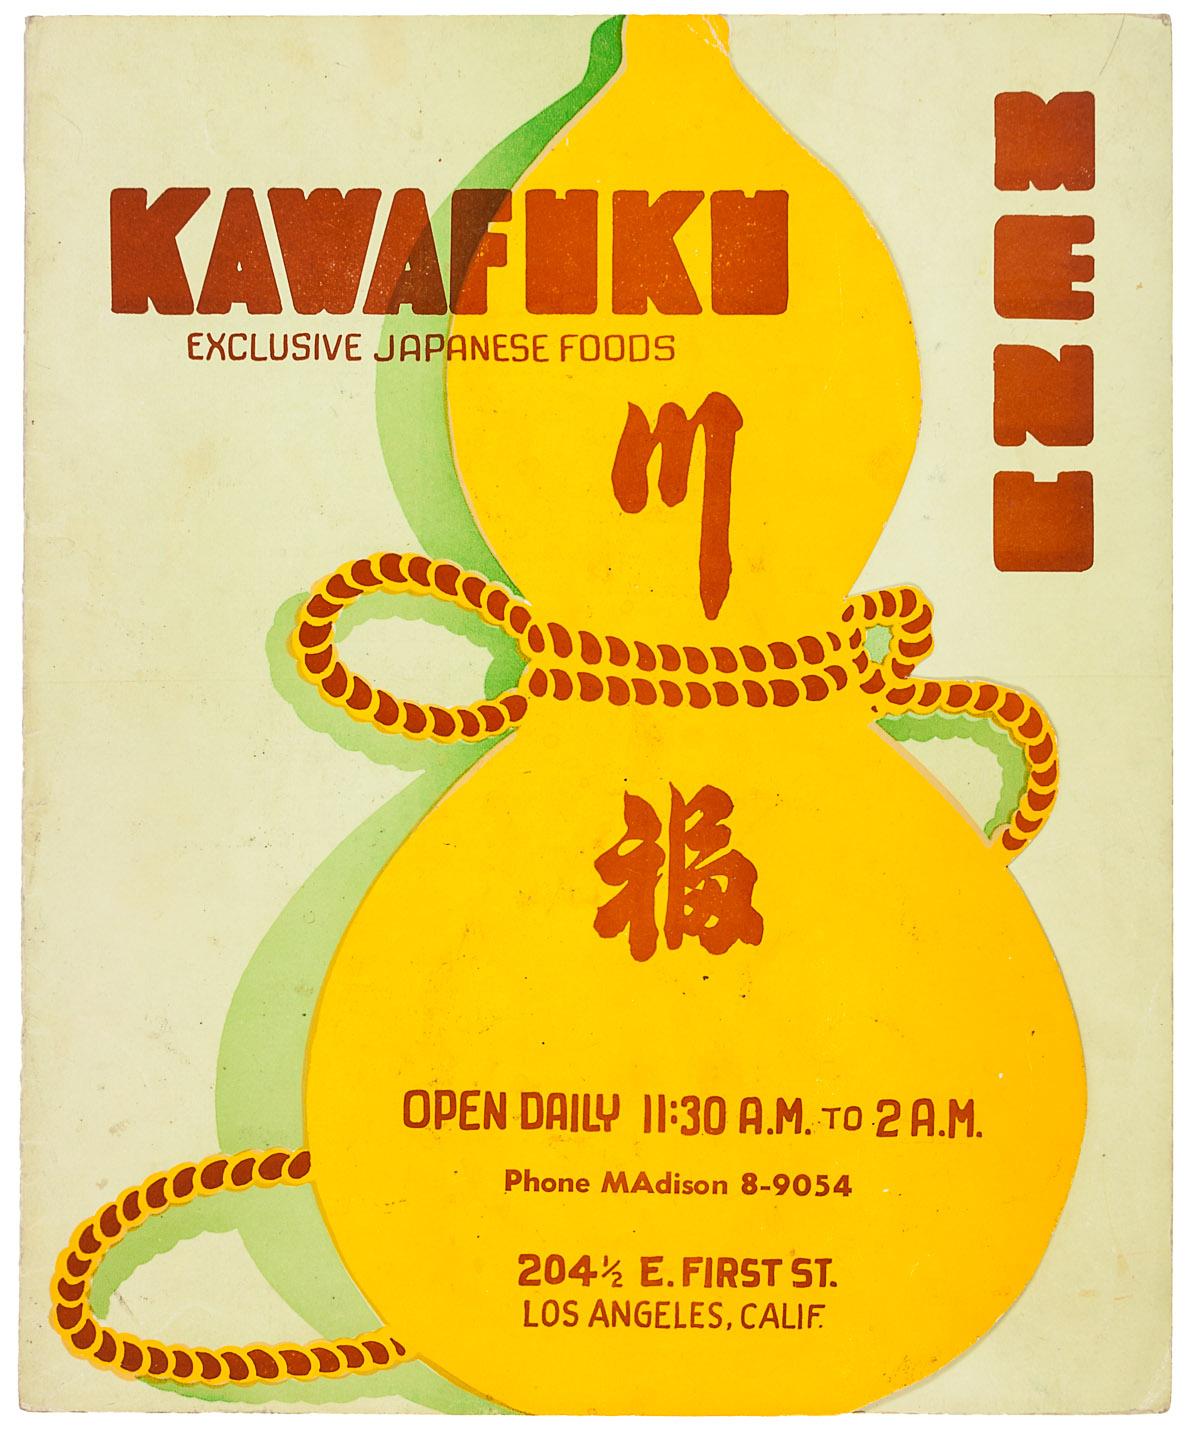 http://www.ithaisushi.com/wp-content/uploads/2019/12/kawafuku-sushi-making-kits.jpg